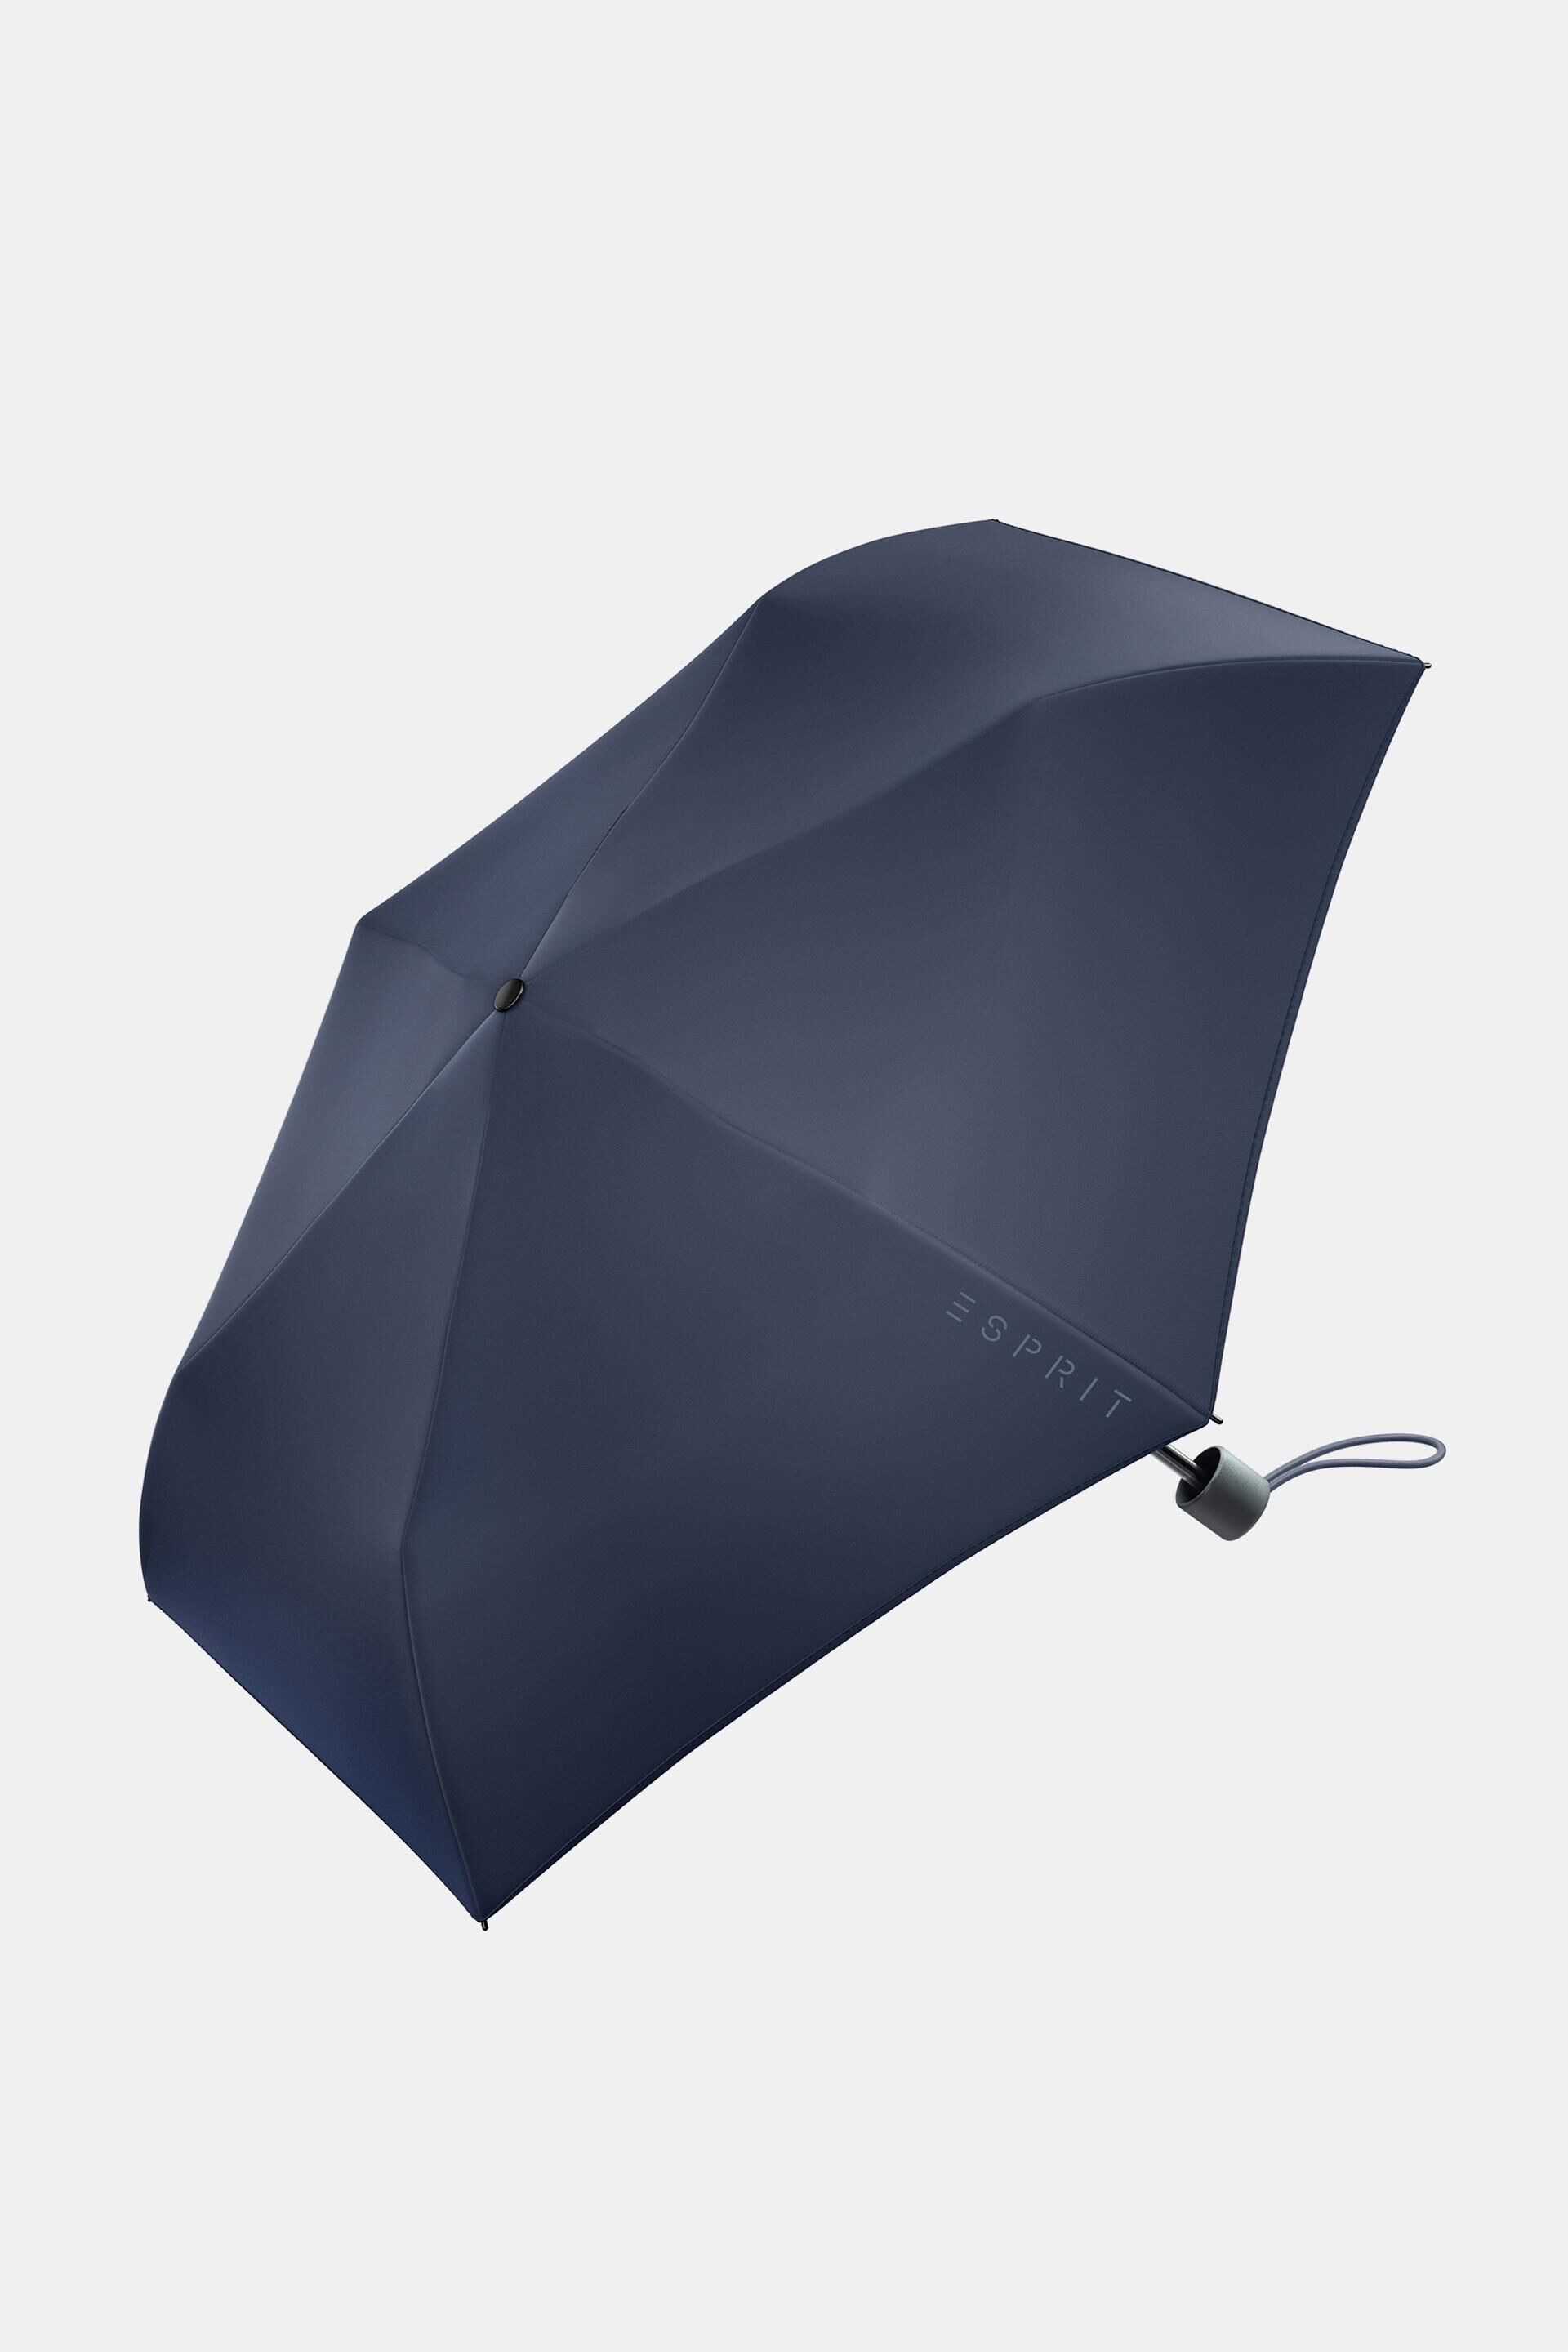 Esprit Pocket in umbrella with print logo blue navy